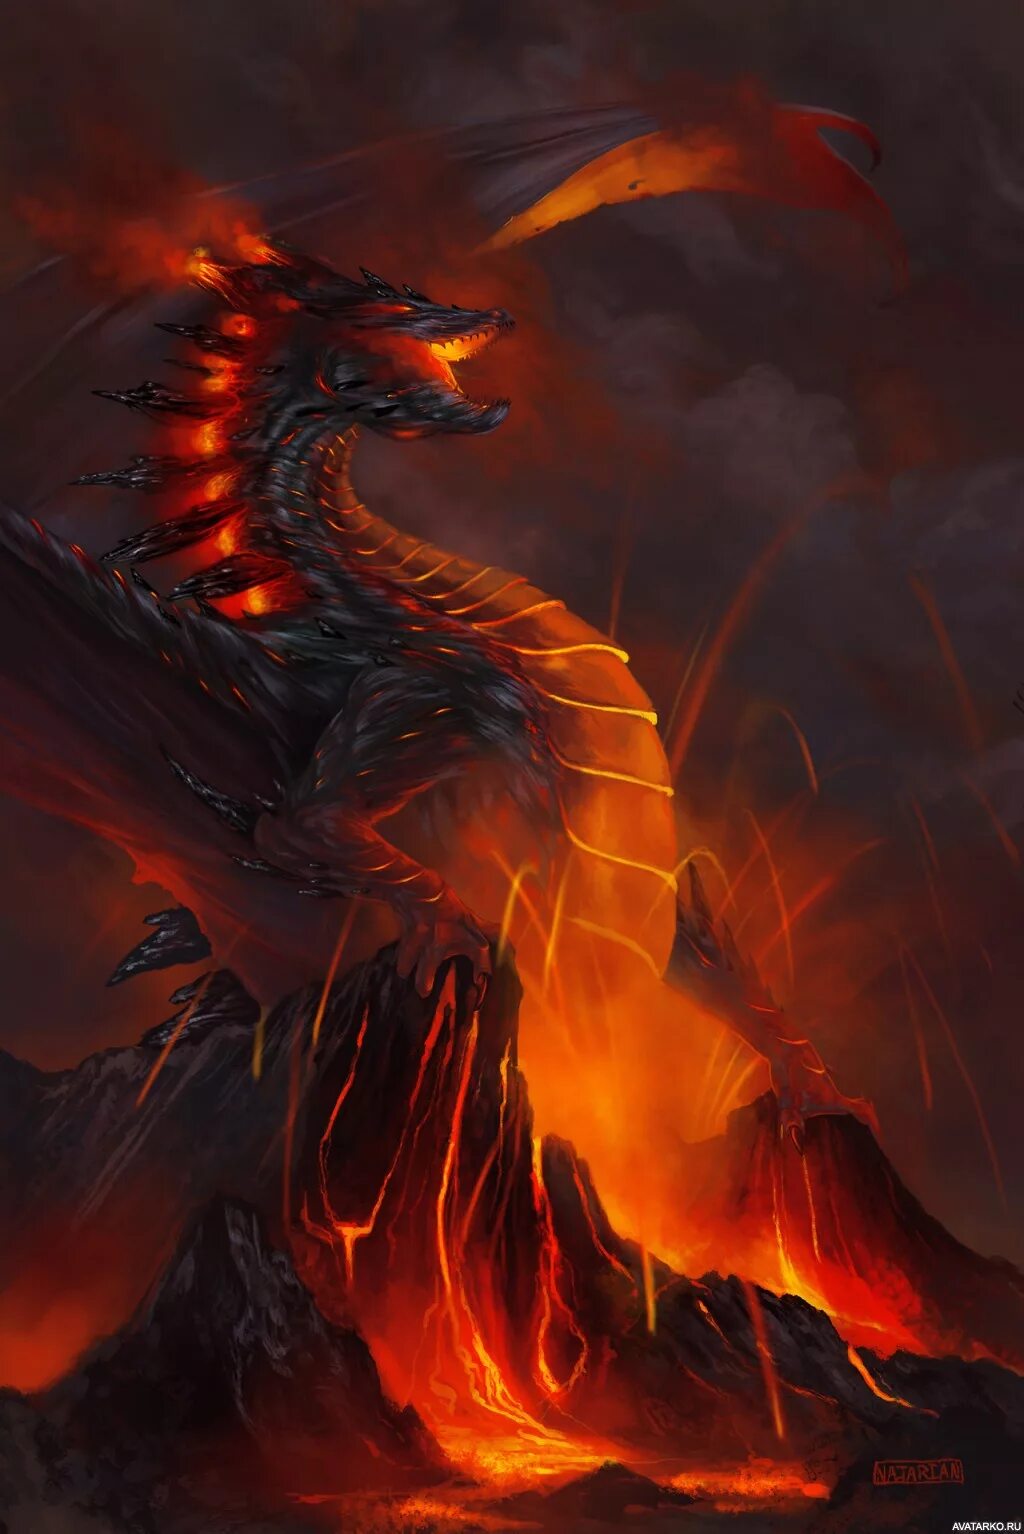 Аркат дракон огня. Огненный дракон драгон. Аркат дракон огня красный огнедышащий дракон. Огненный дракон Гондолина. Дракон темного пламени